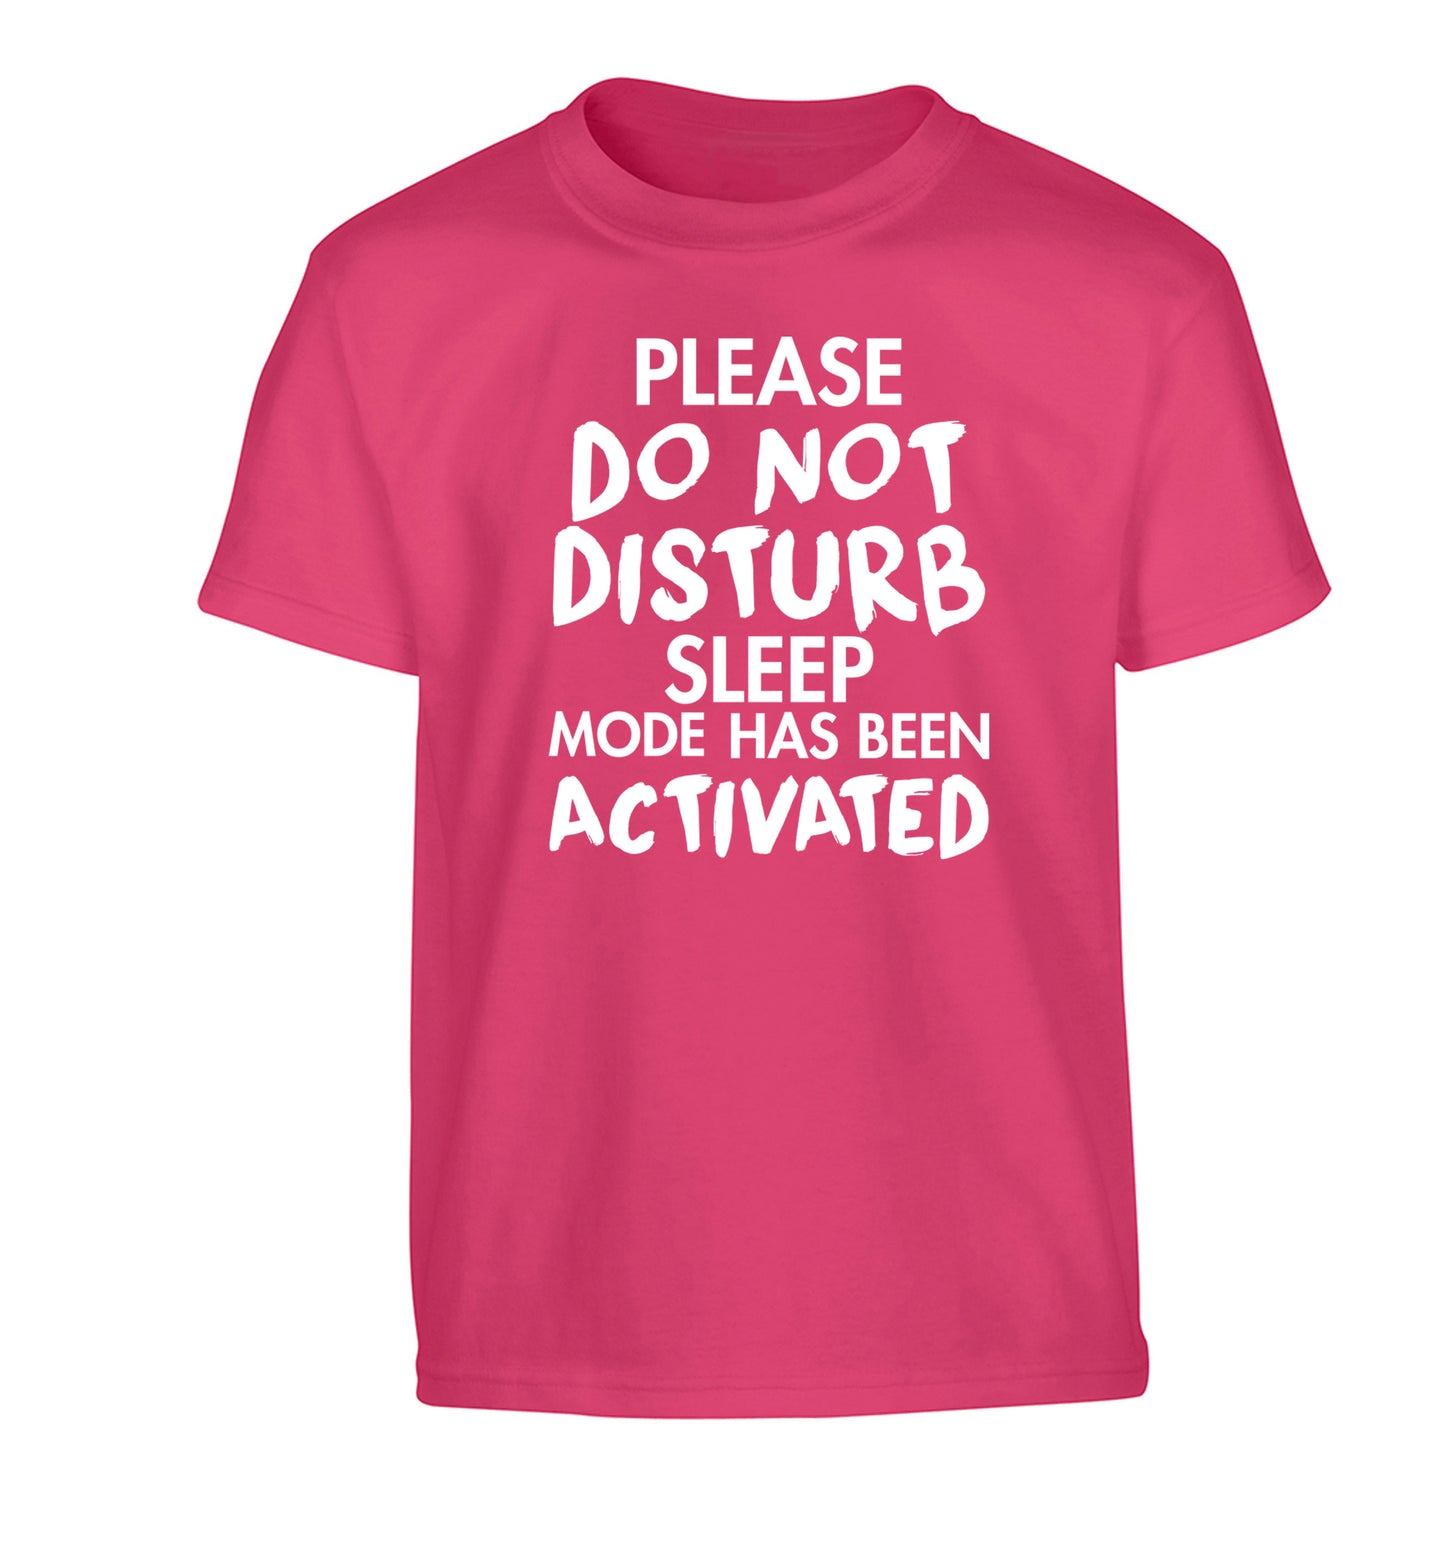 Please do not disturb sleeping mode has been activated Children's pink Tshirt 12-14 Years